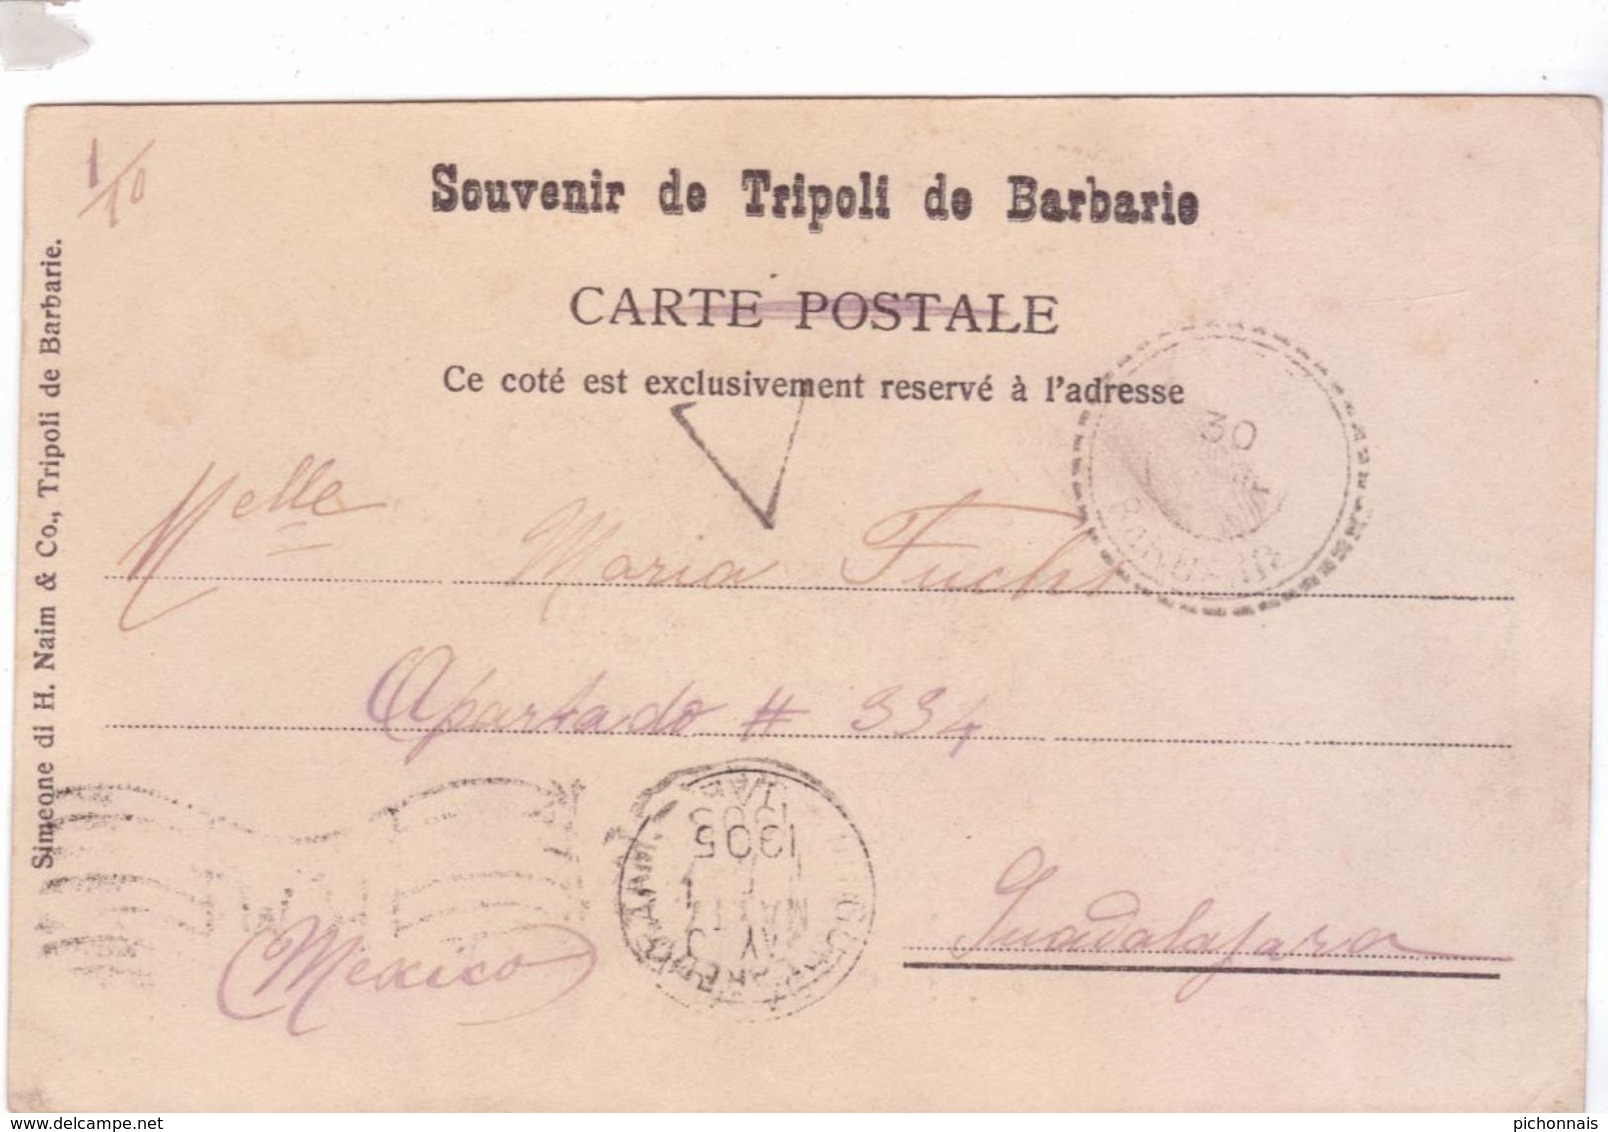 TRIPOLI Afrique Habitation Negresse Hutte Libye 1905 - Libia